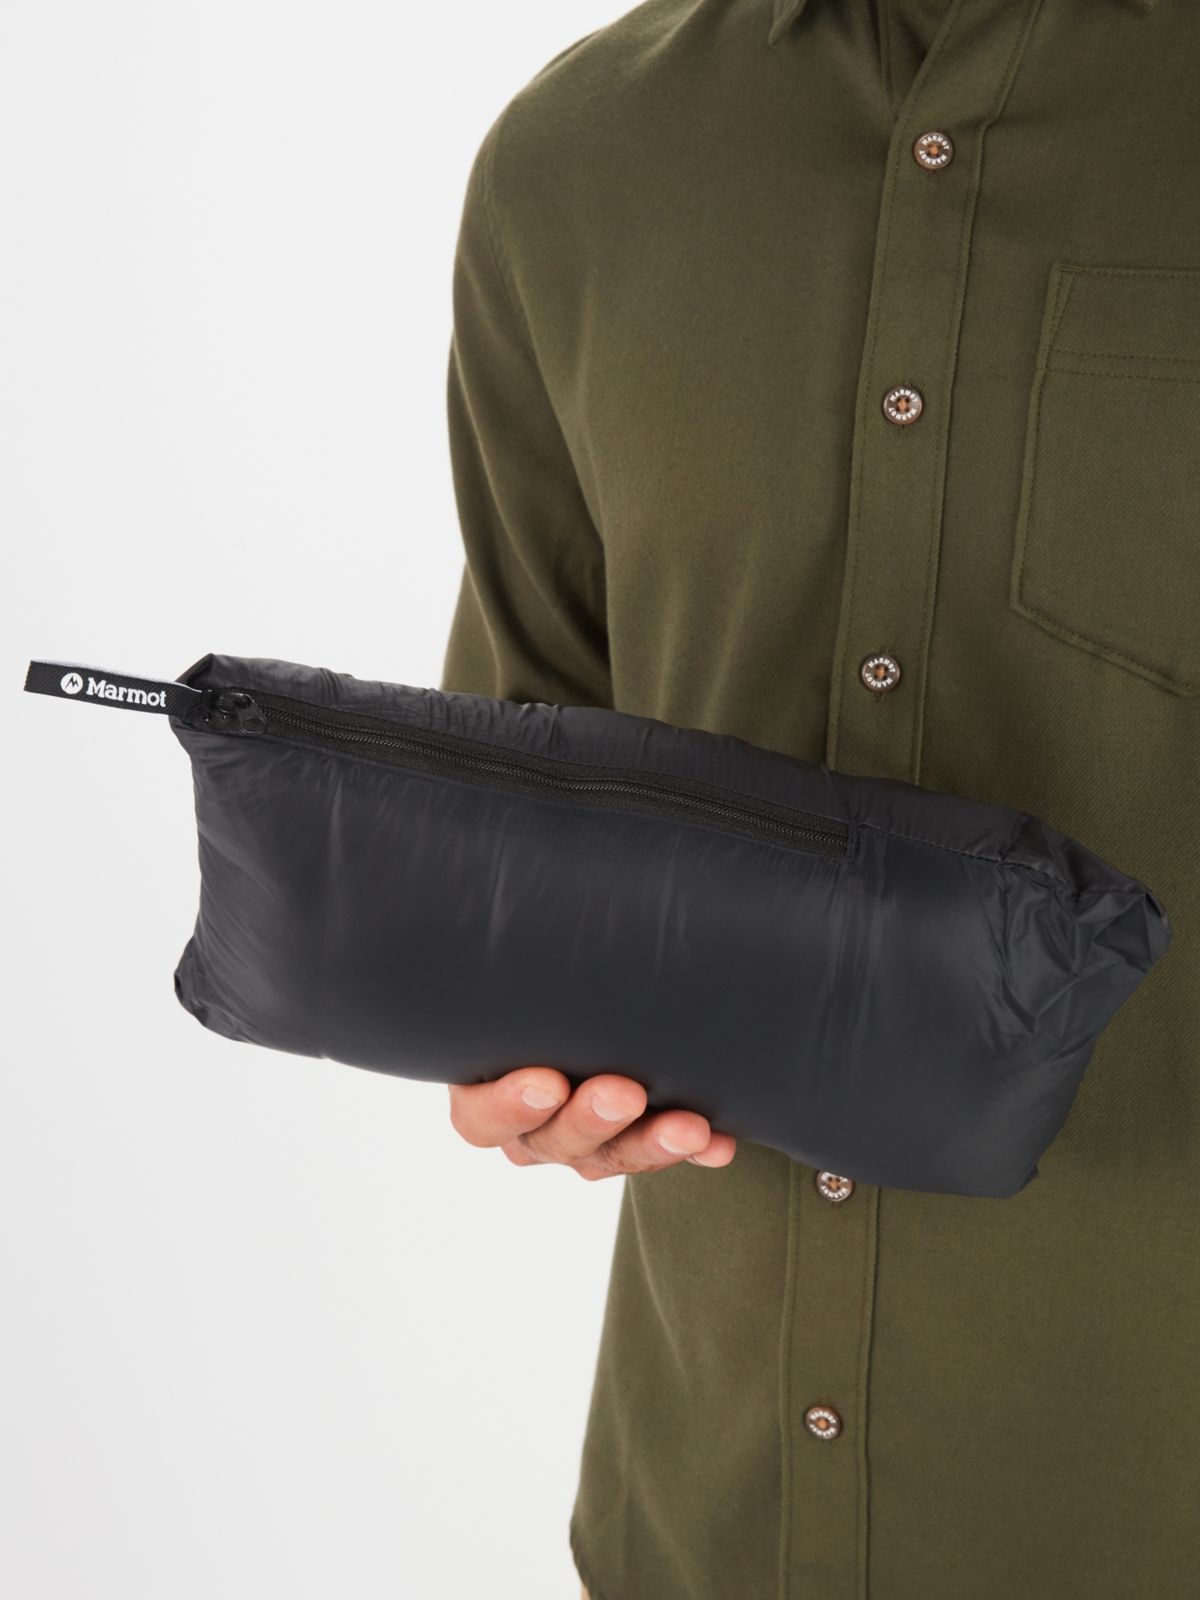 zipper storage bag